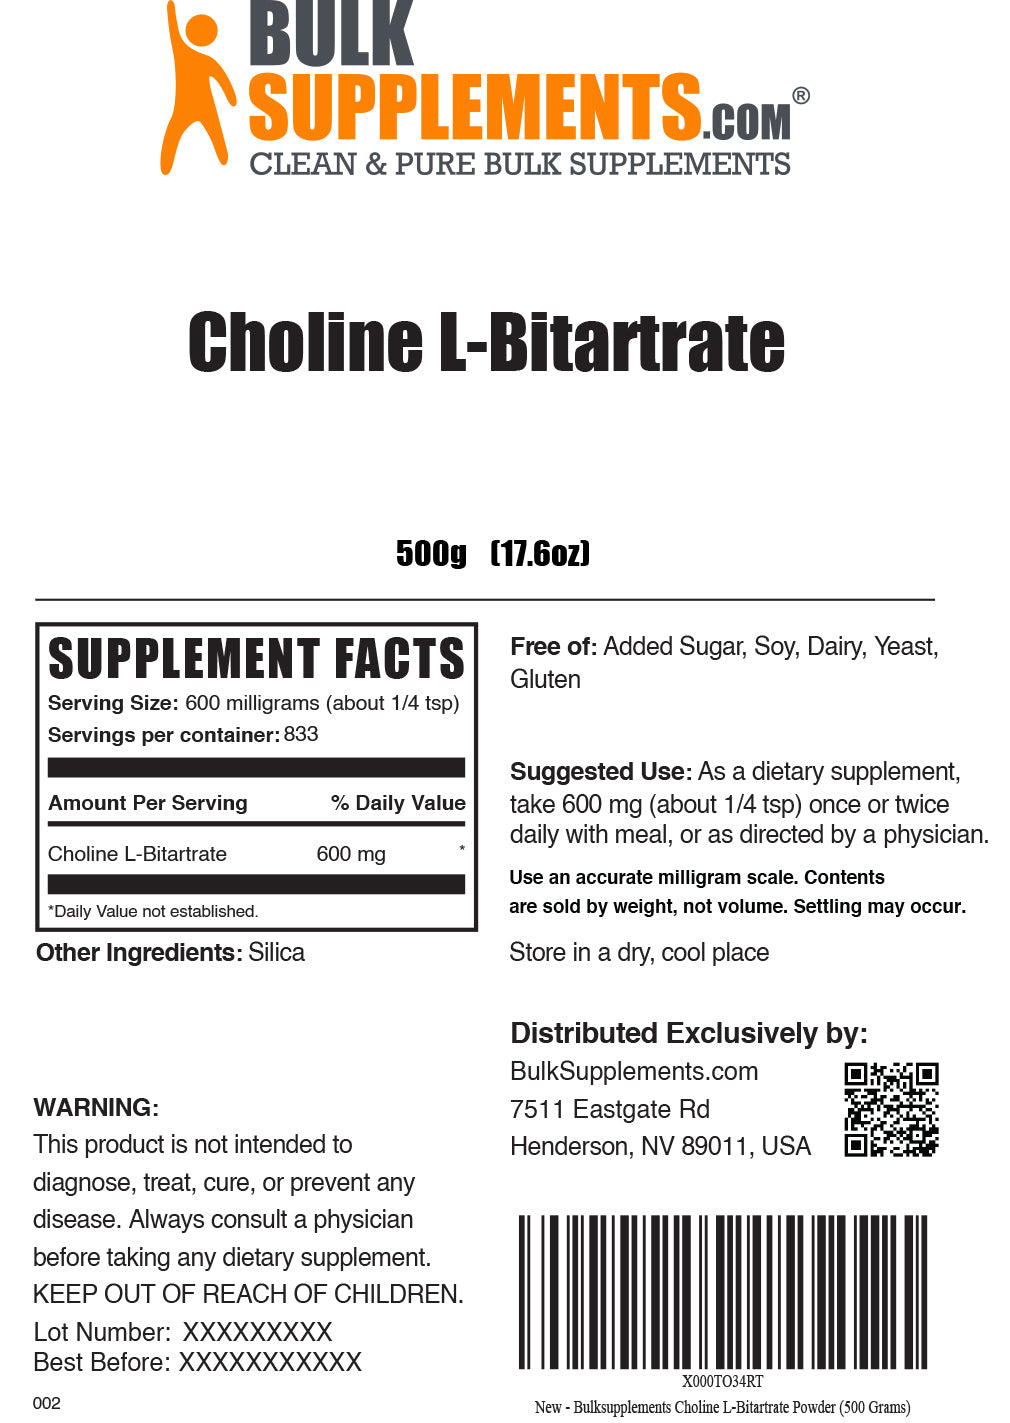 Choline L-Bitartrate powder label 500g